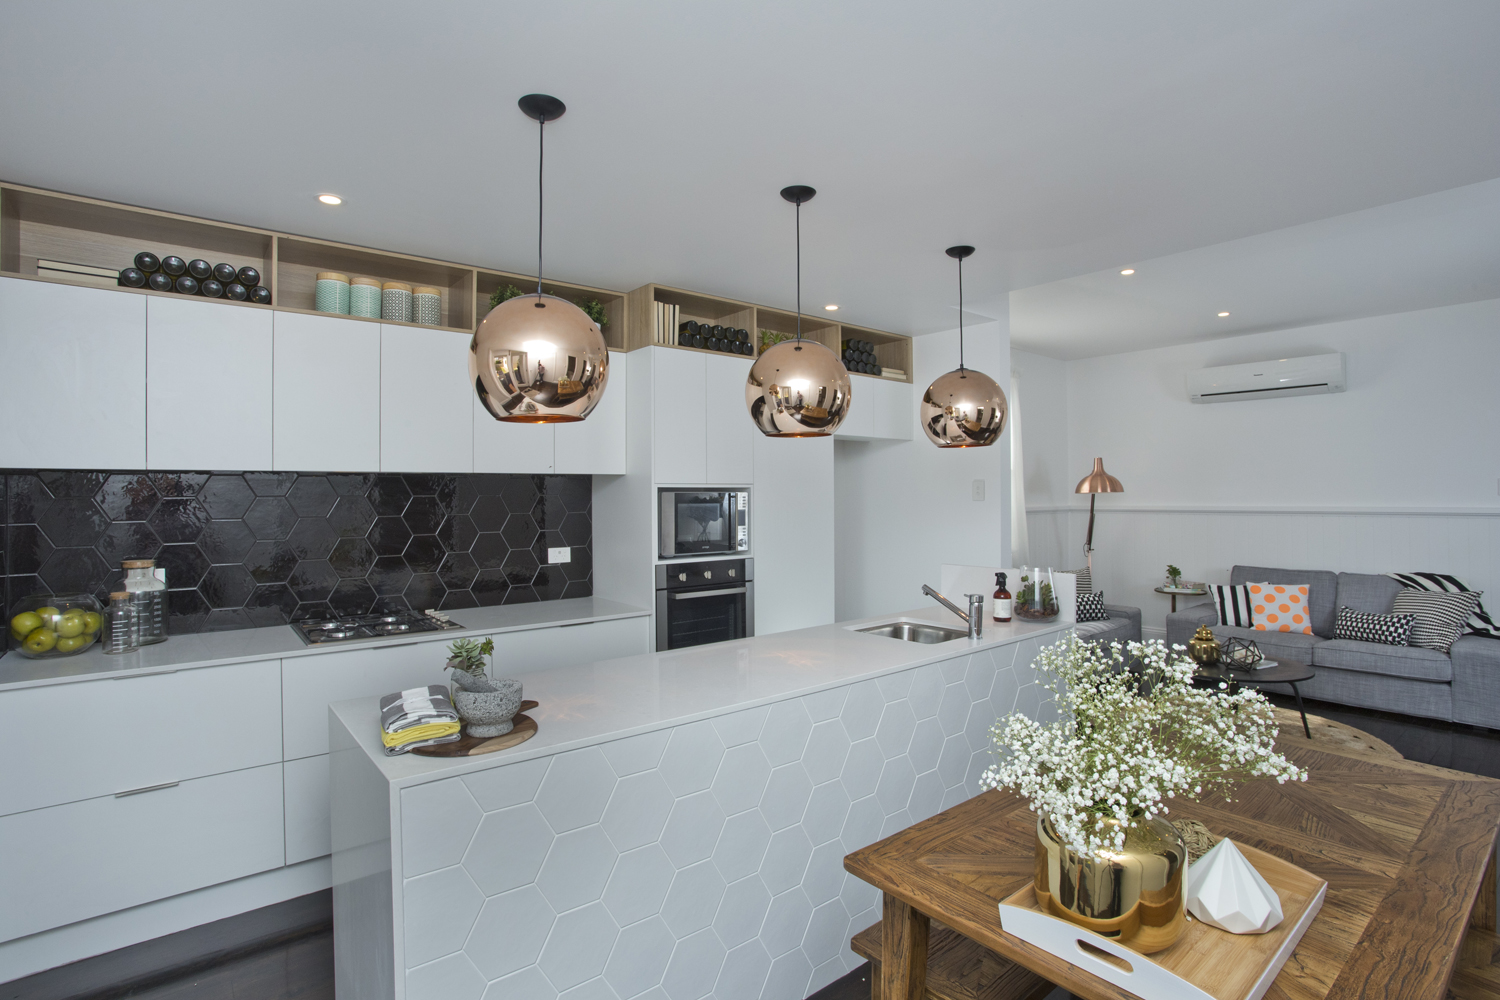 8 small kitchen design tips - The Interiors Addict